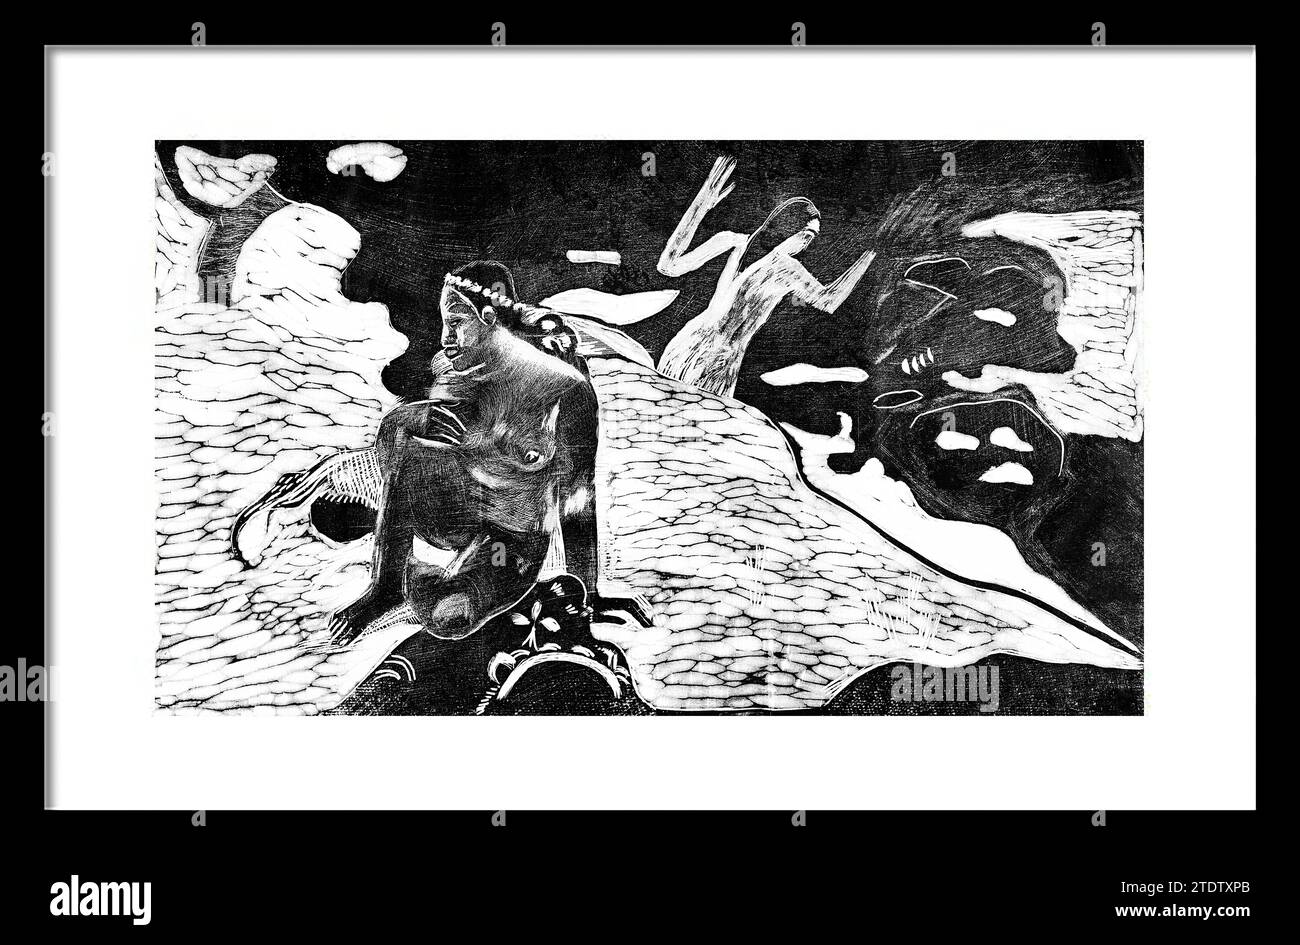 Auti te Pape Paul Gauguin. (Francese, Parigi 1848-1903 Atuona, Hiva Oa, Isole Marchesi) Data: 1893-1894. Taglio su carta cinese. 1/16 x 14 poll. (20,5 Foto Stock